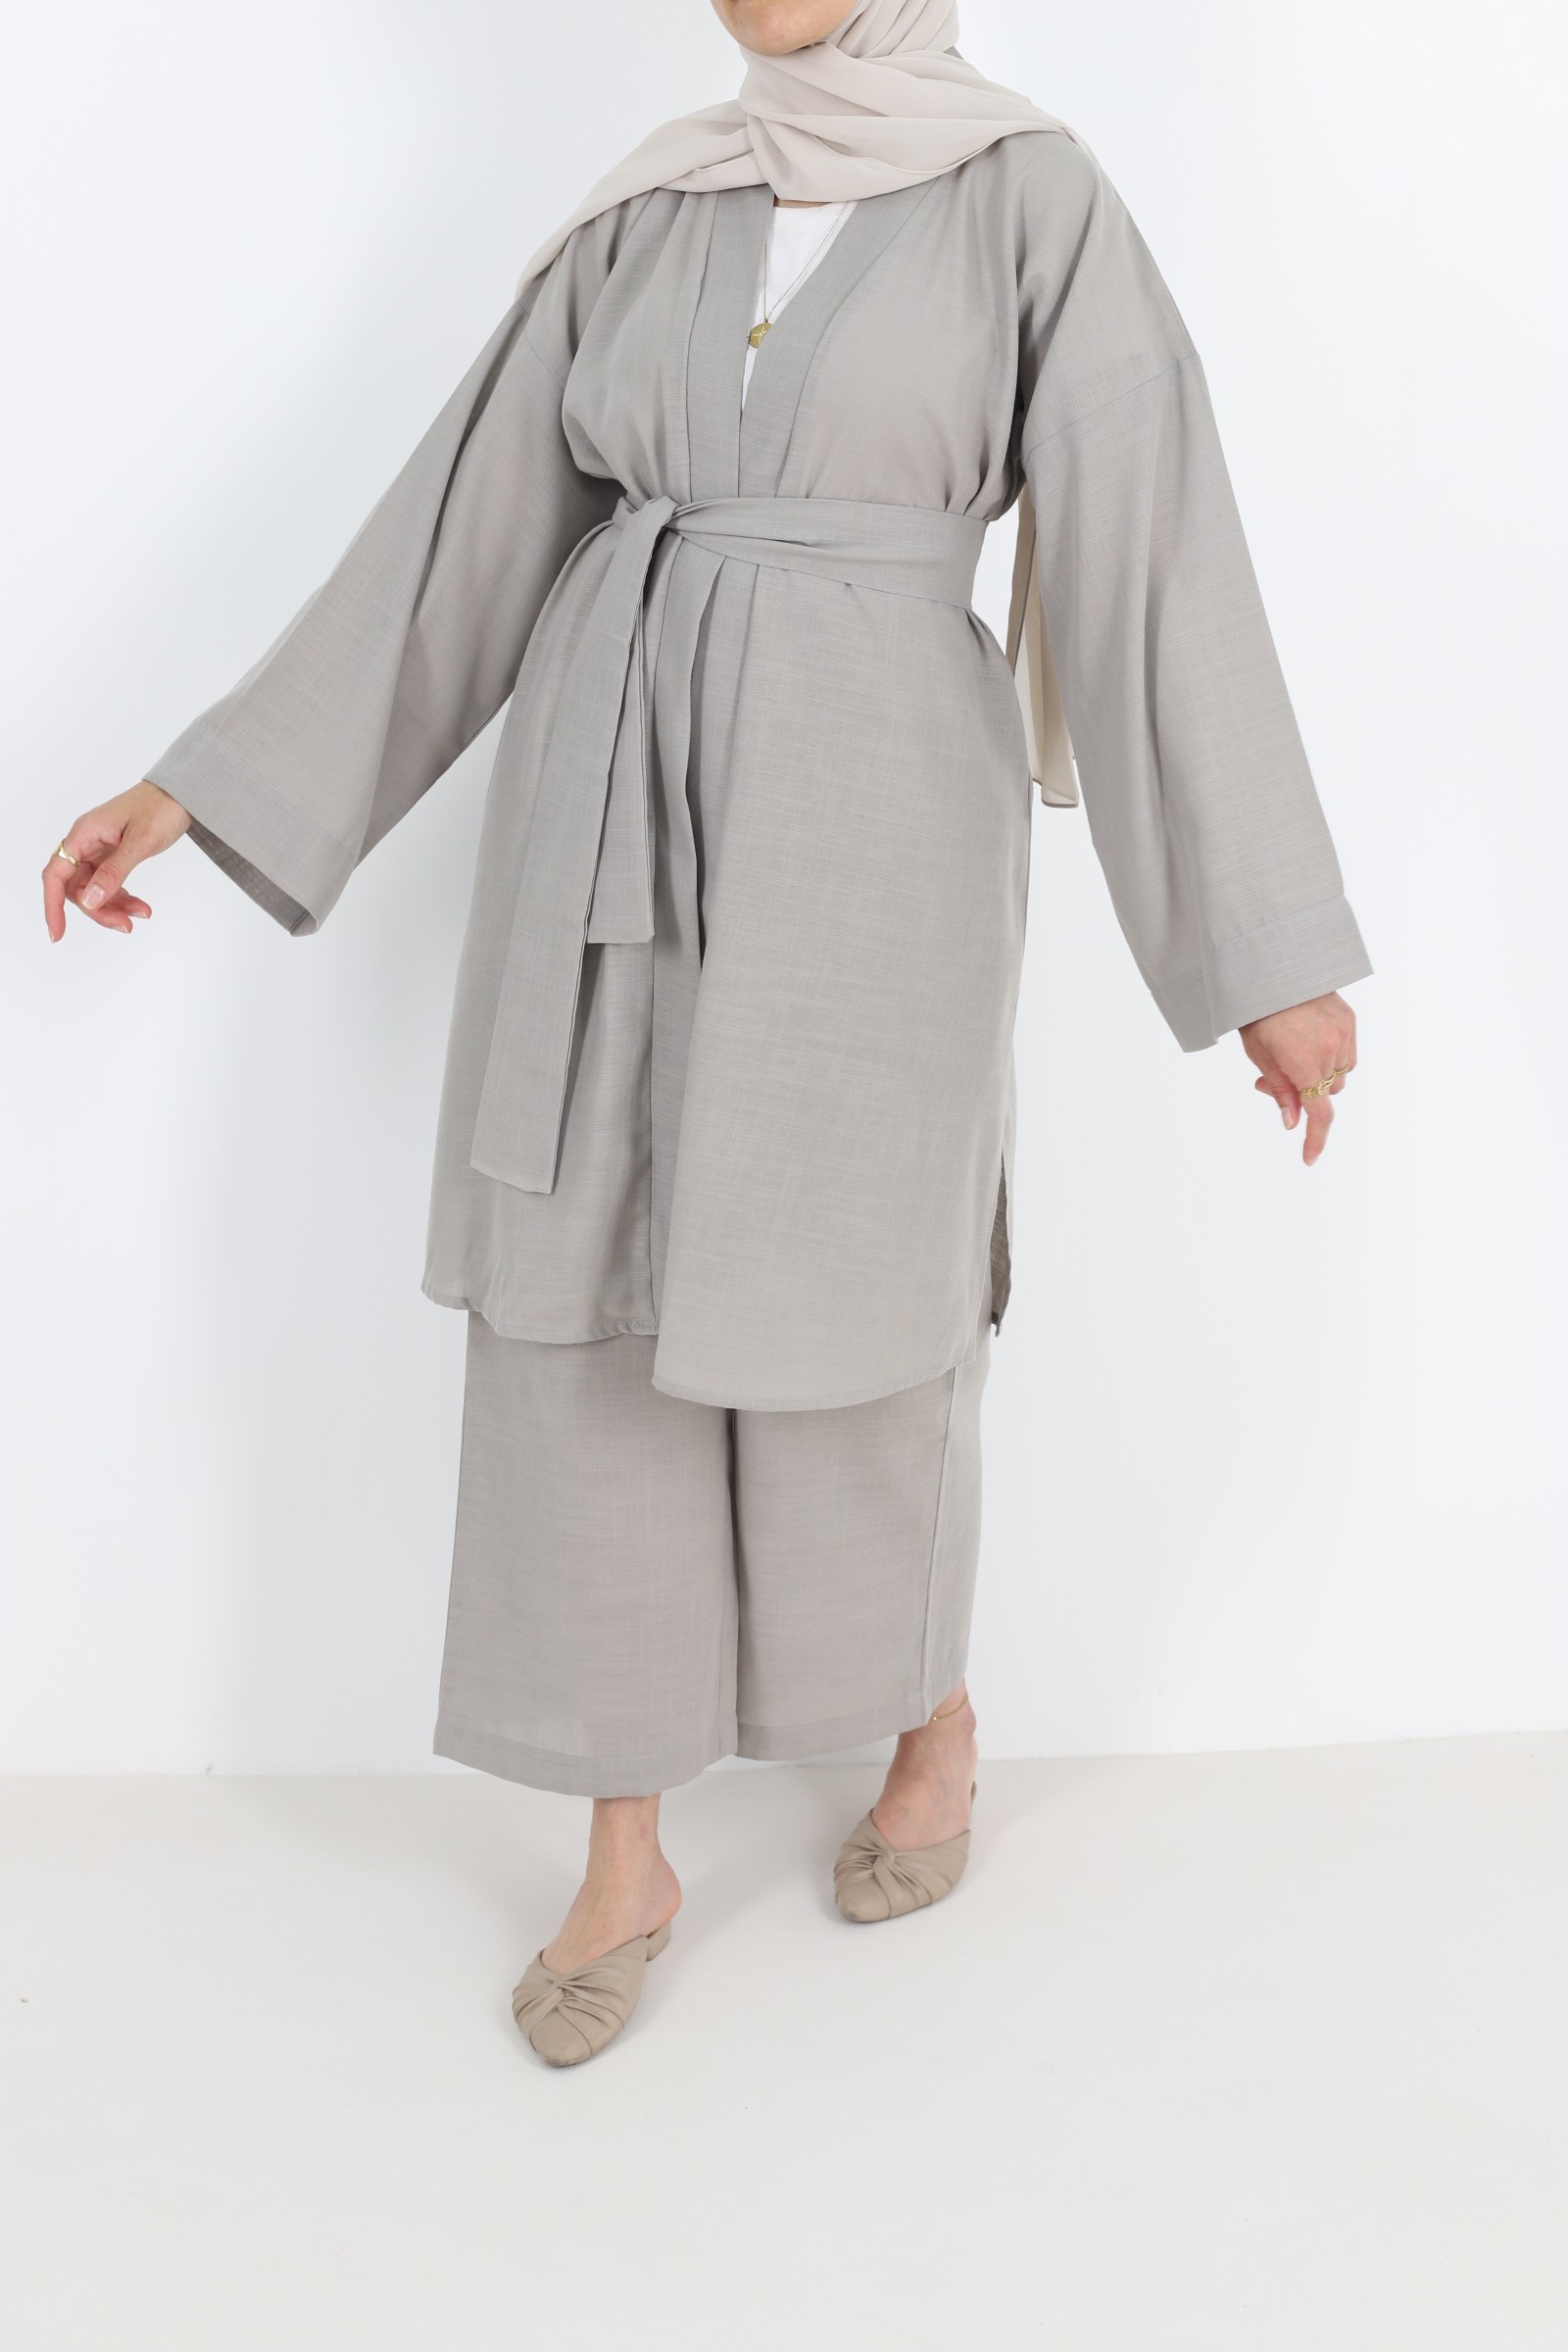 Ensemble pantalon et kimono en lin tenue d'été pour femme musulmane 